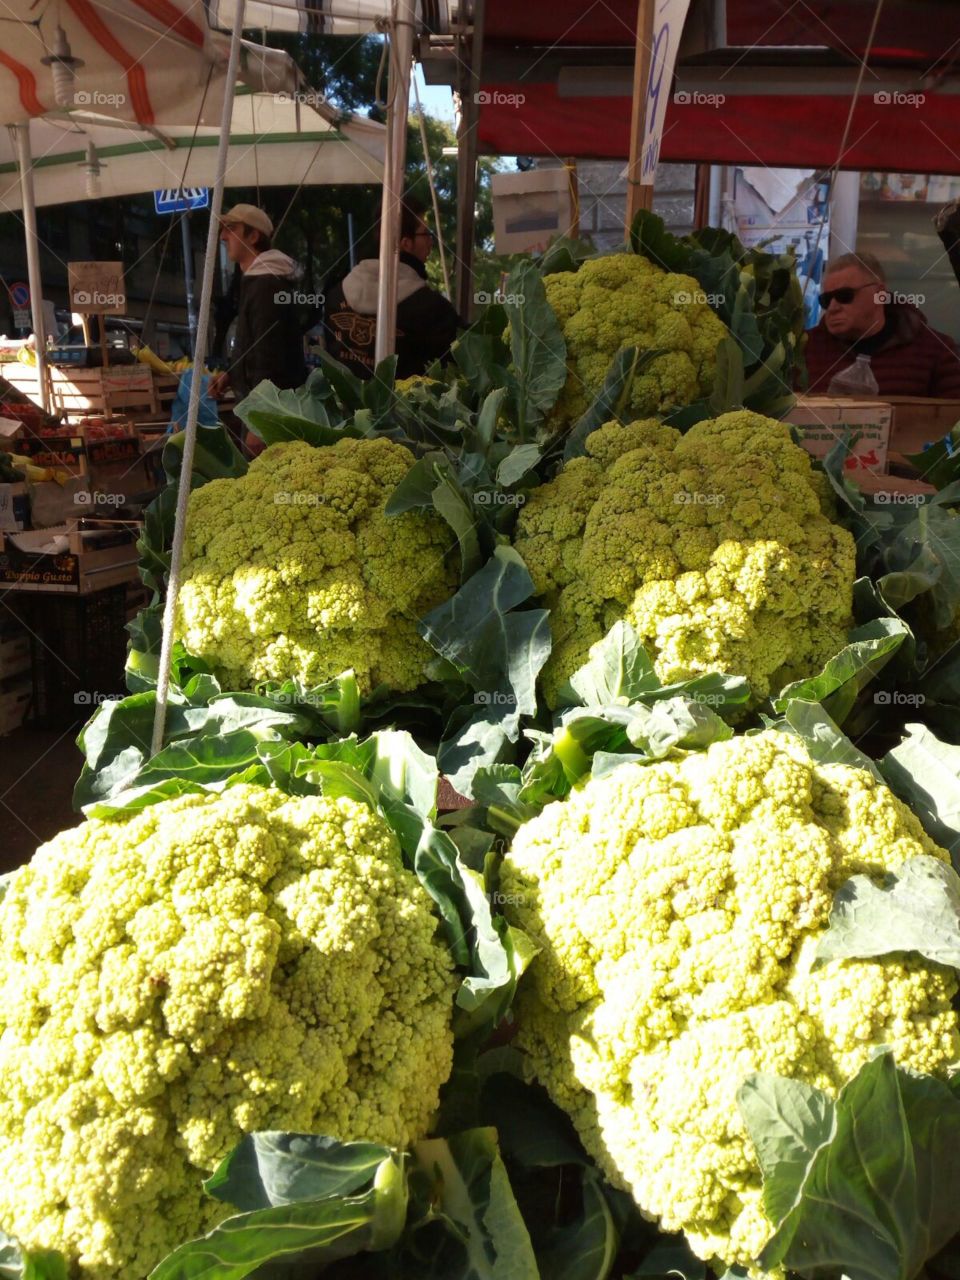 do you Mike vegetable? Cauliflowerin Sicily